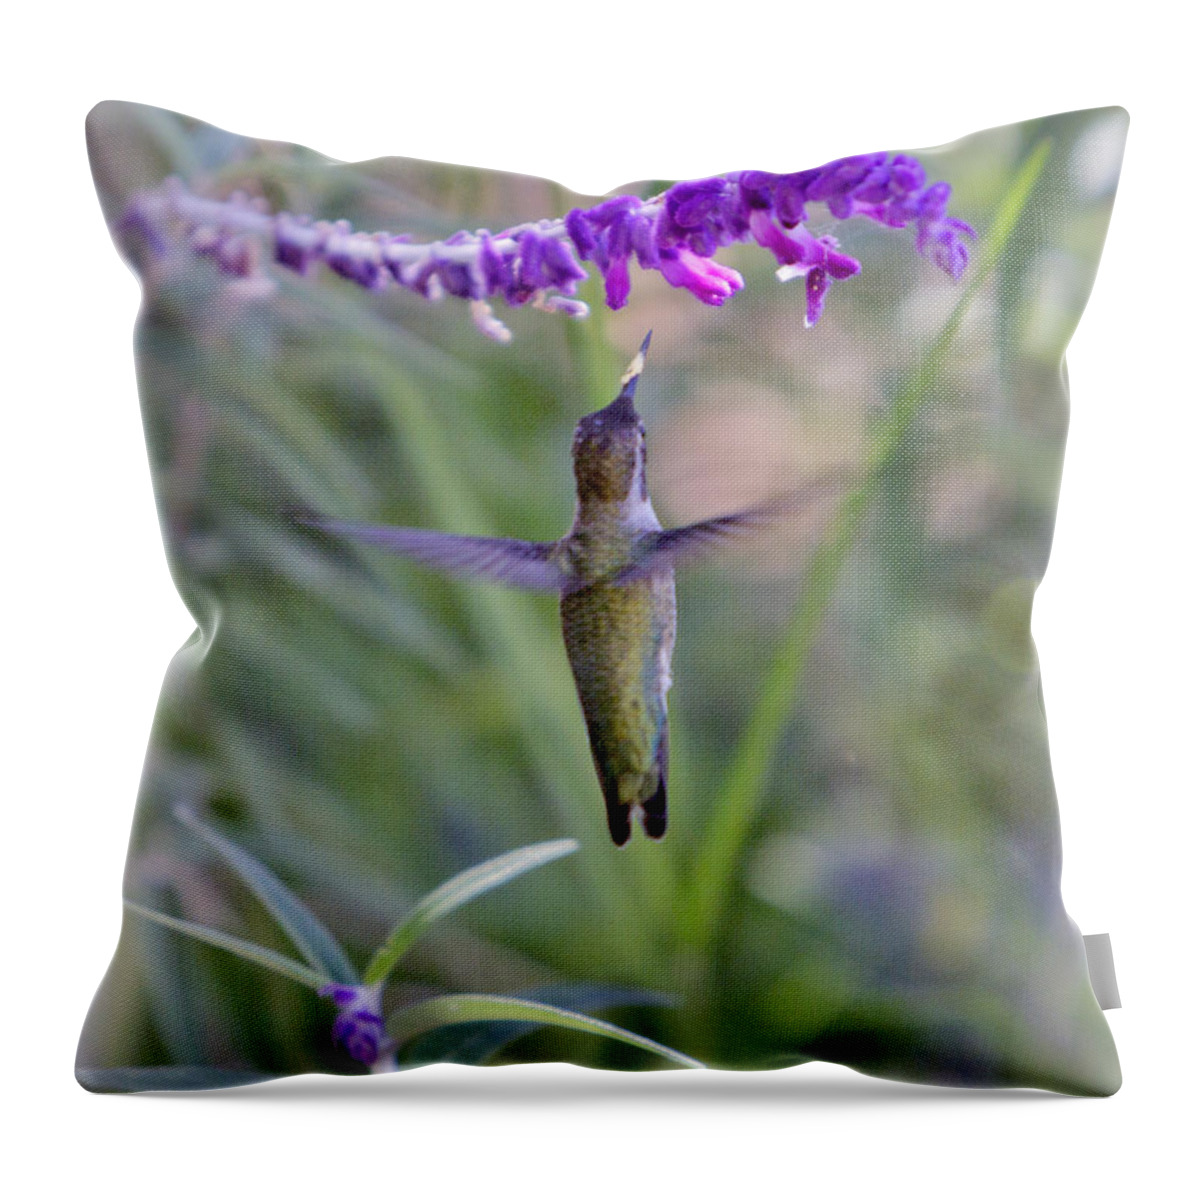 Hummingbird Throw Pillow featuring the photograph Hummingbird Series 03 by Her Arts Desire